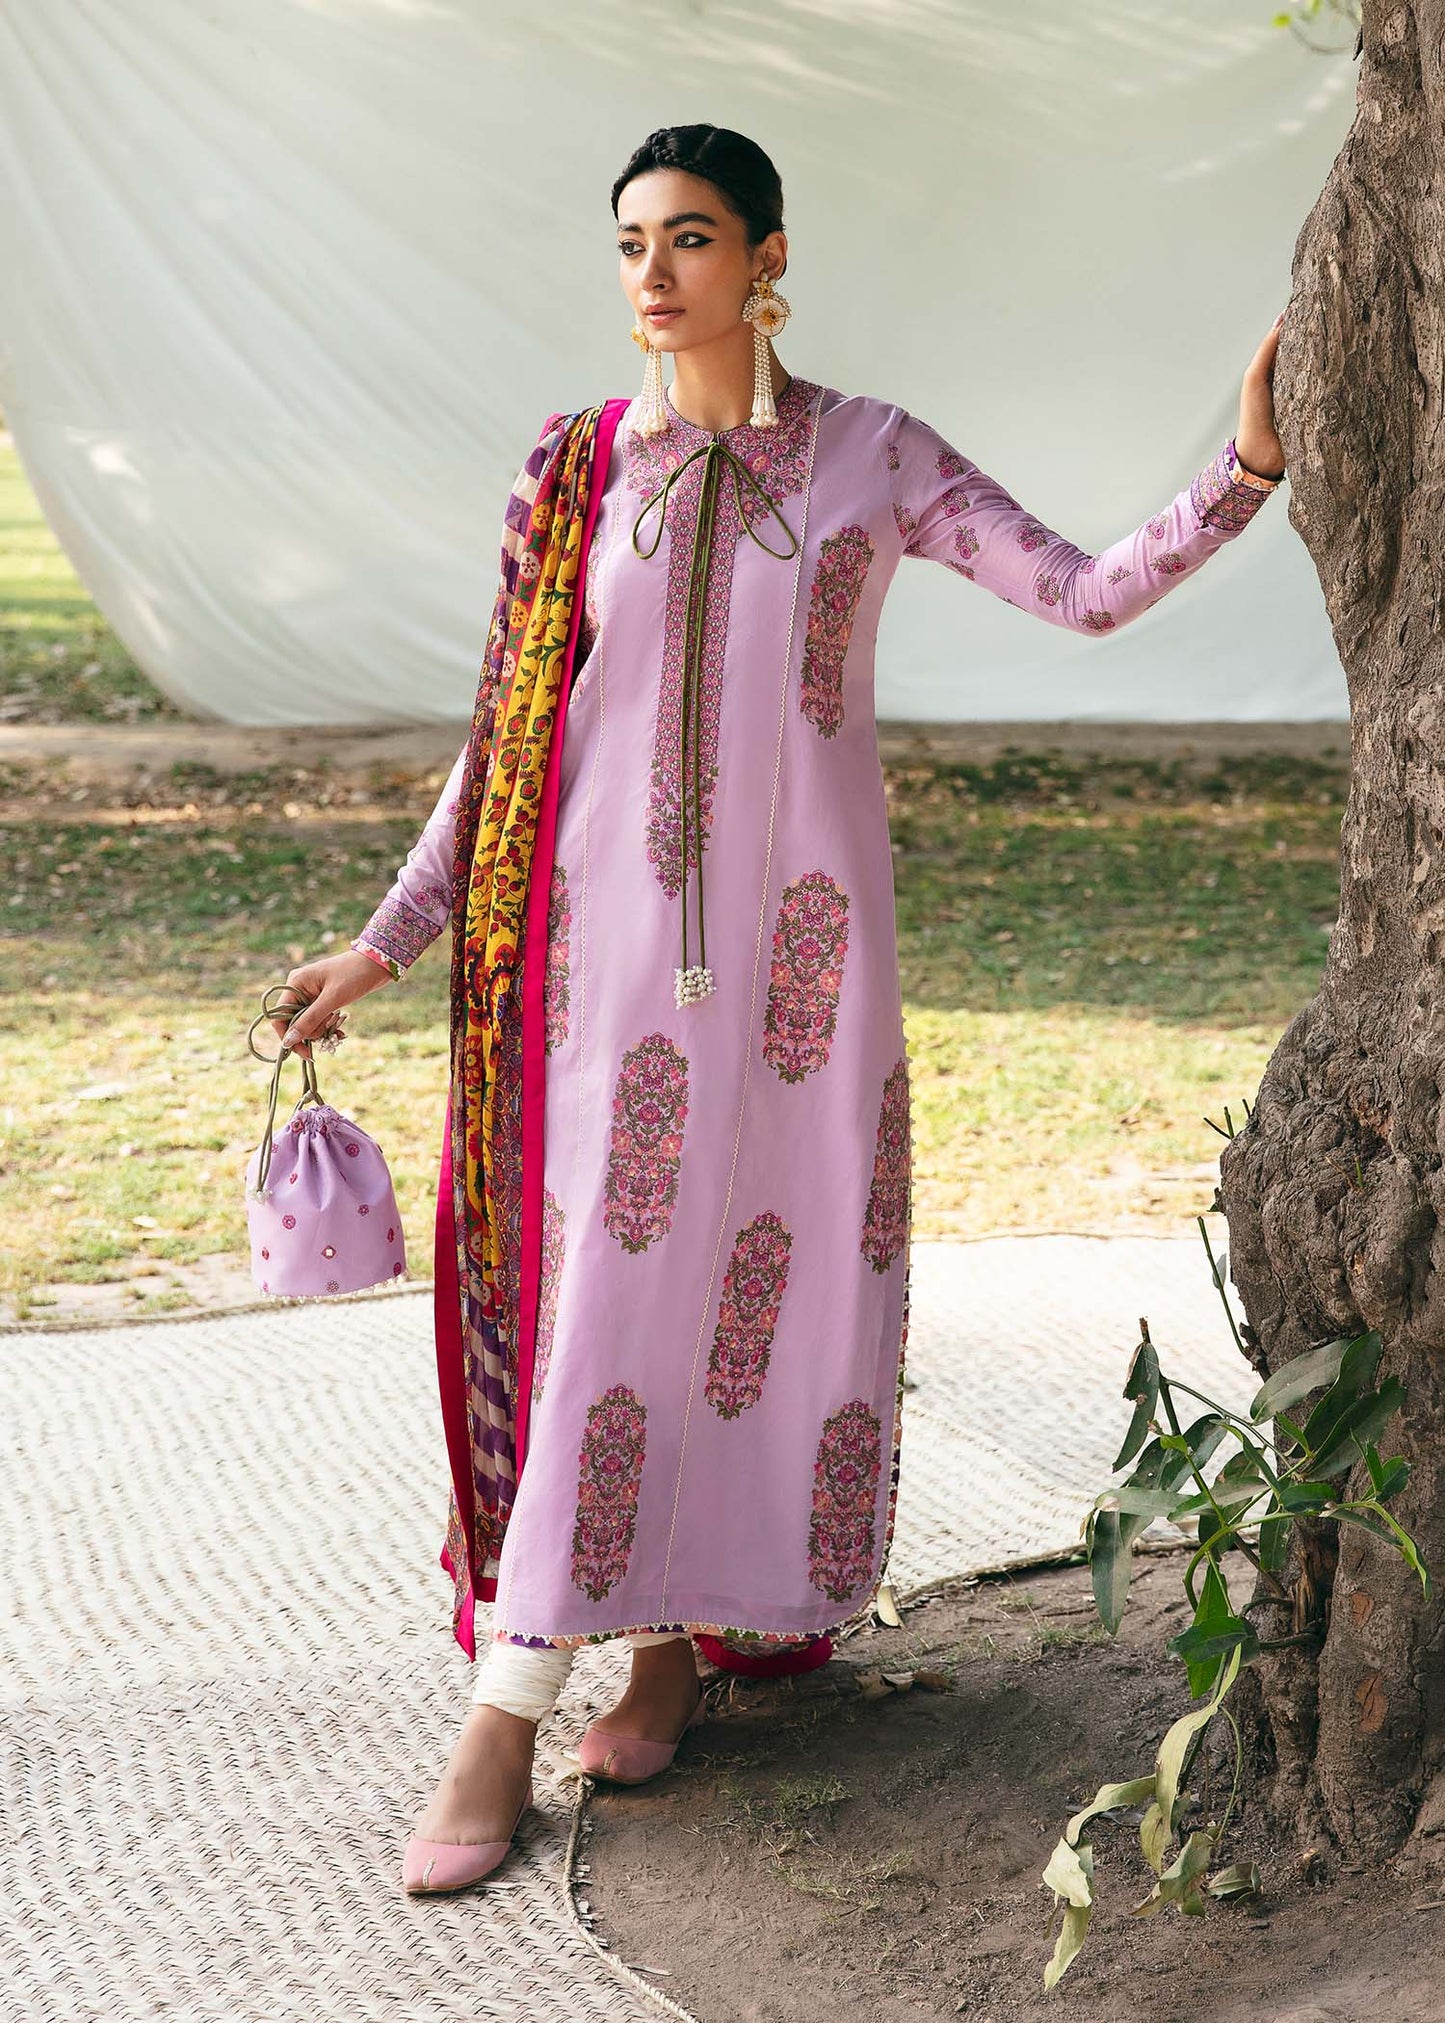 Buy Now - KASNI - Masuam Lawn Collection'23 - Hussain Rehar - Pakistani Designer Clothes - Bridal and Party Dresses - Shahana Collection UK 